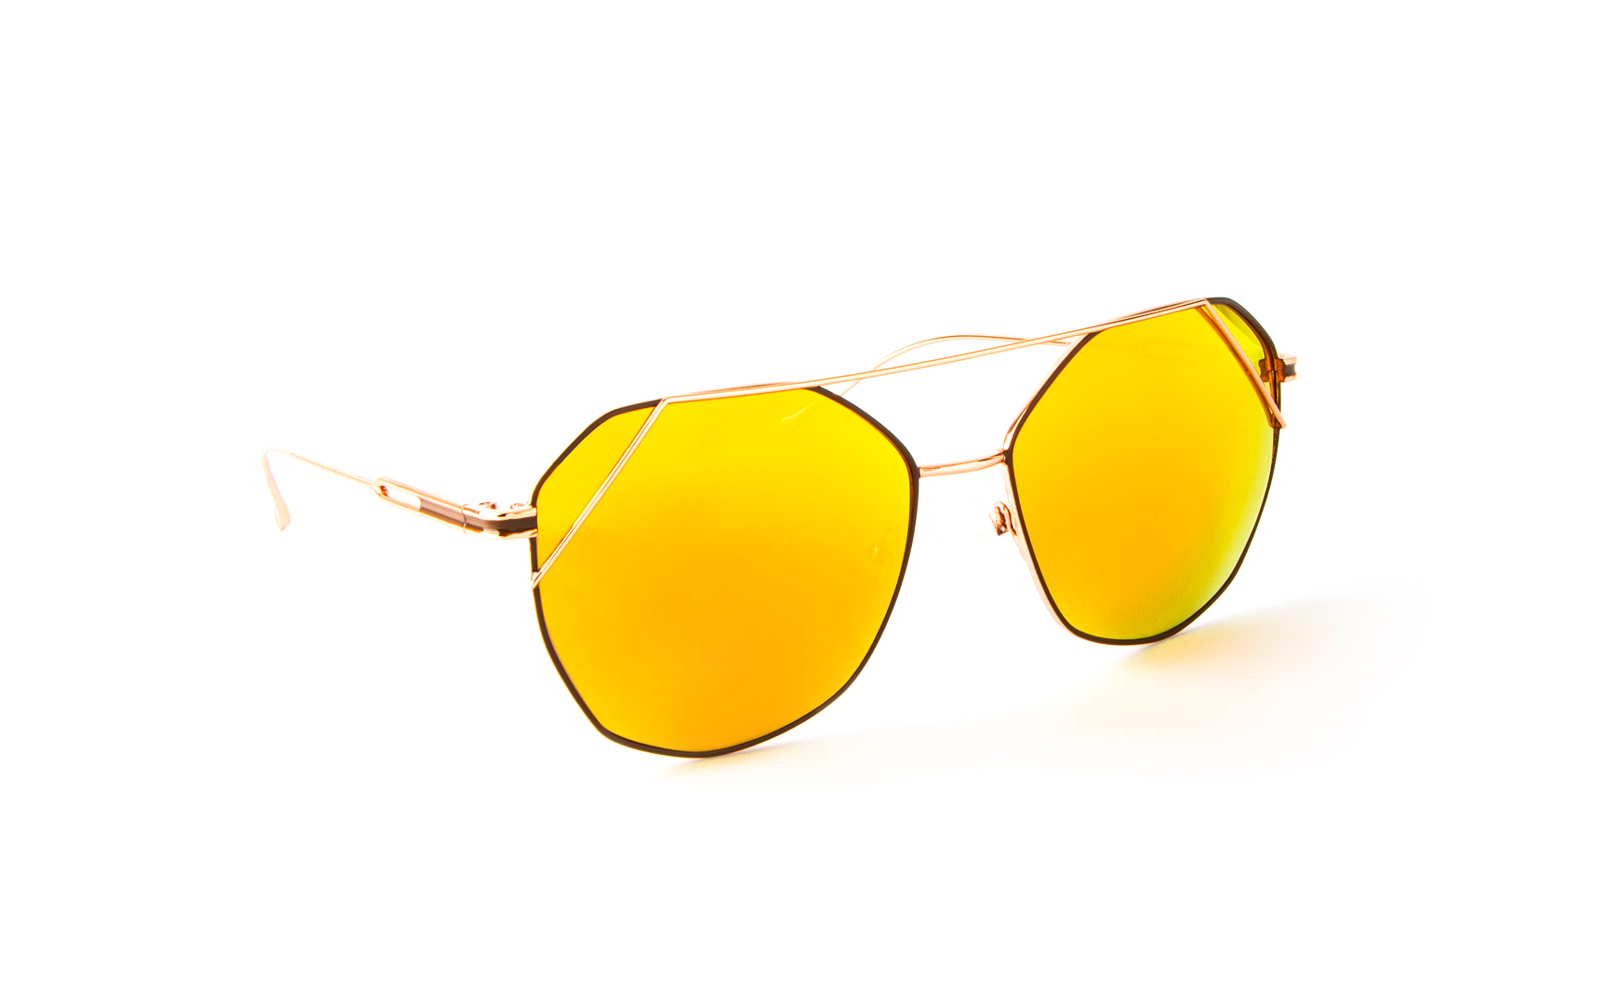 Invicta Men's Objet D Art Octagonal Sunglasses, Yellow (27580-OBJ-12-08)